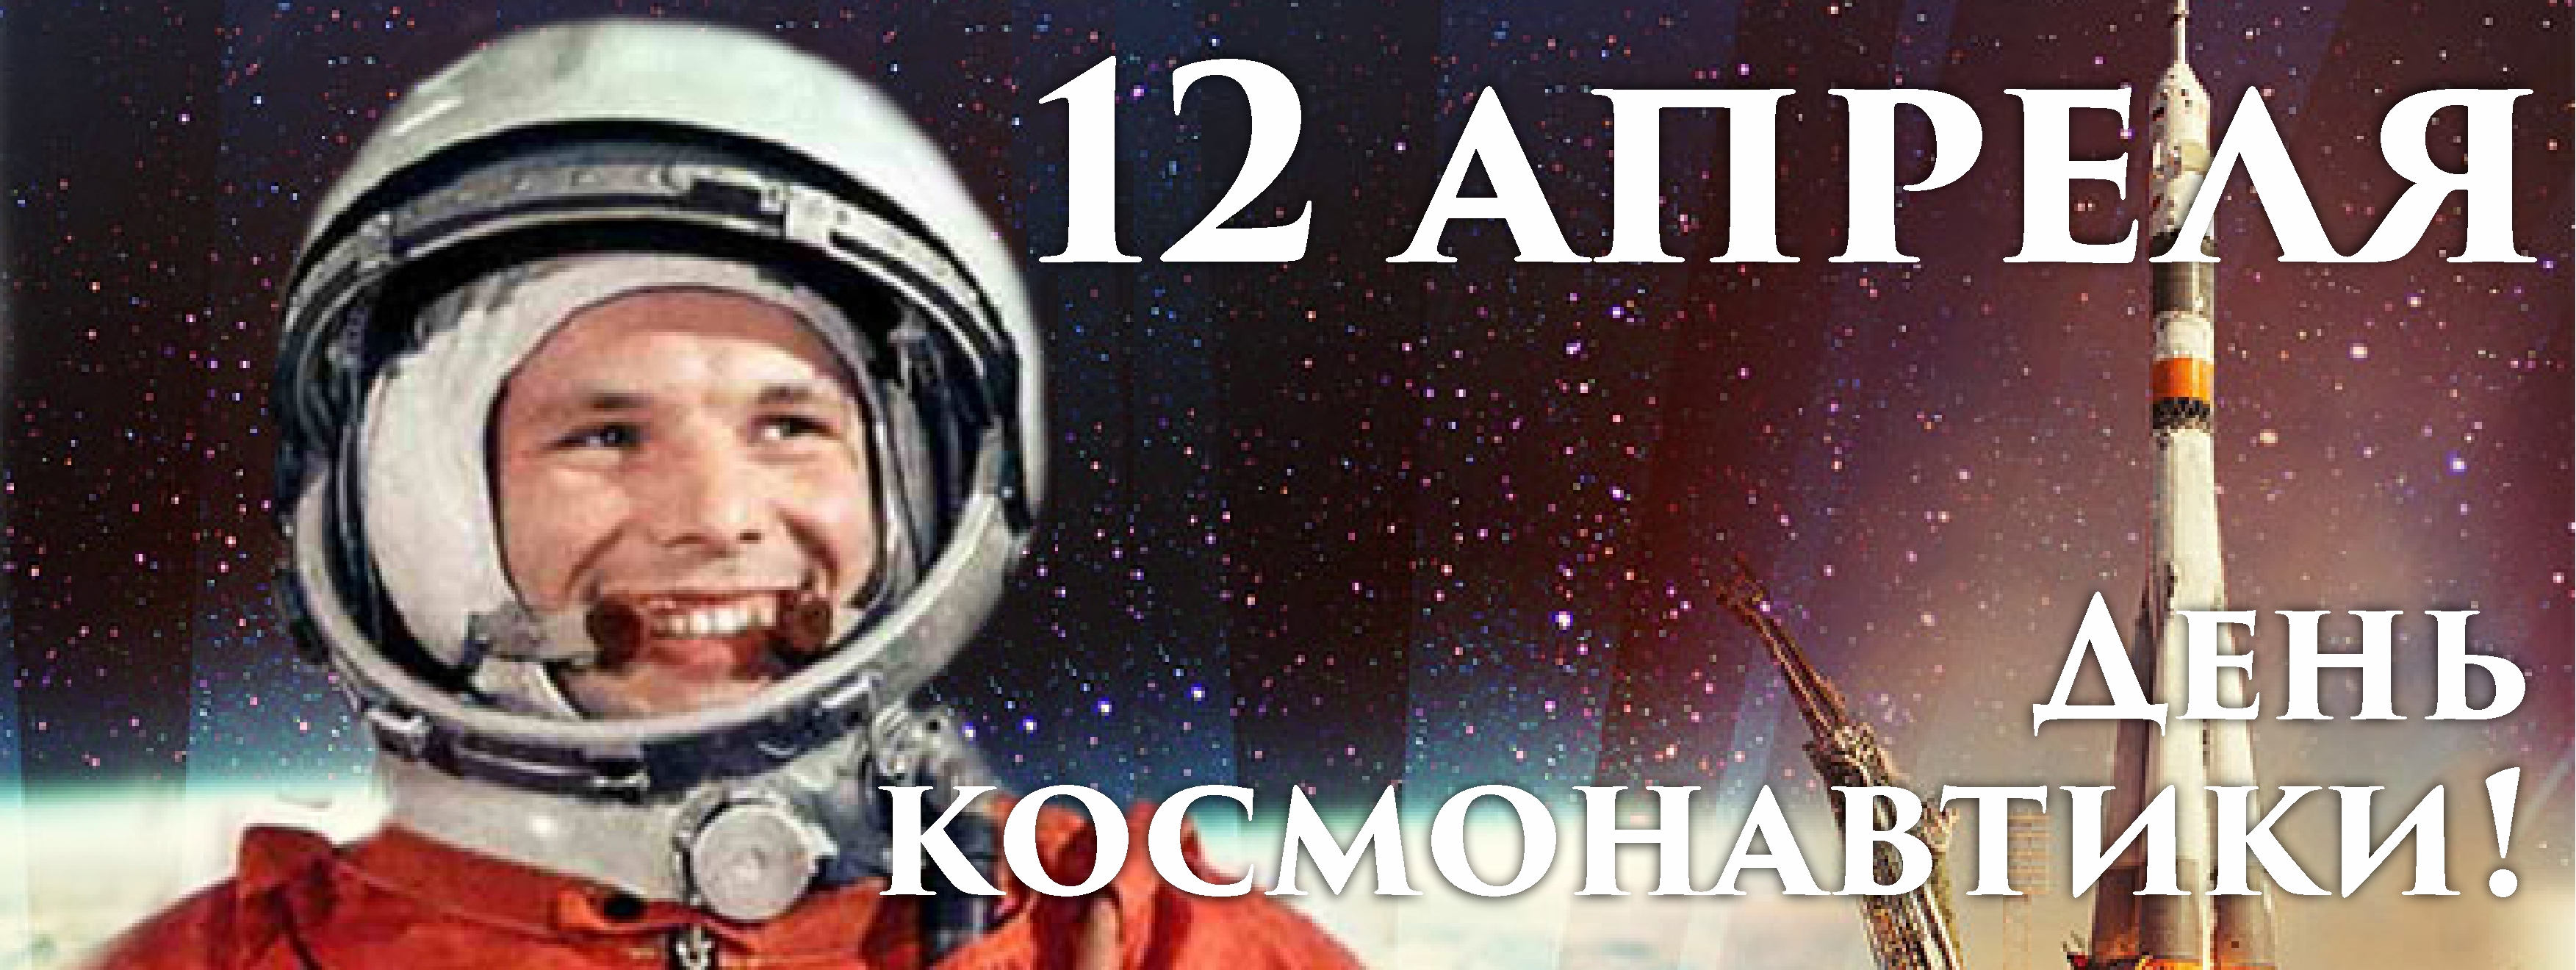 12 апреля 23 года. День космонавтики. 12 Апреля день космонавтики. День Космонавта. День космонавтики картинки.